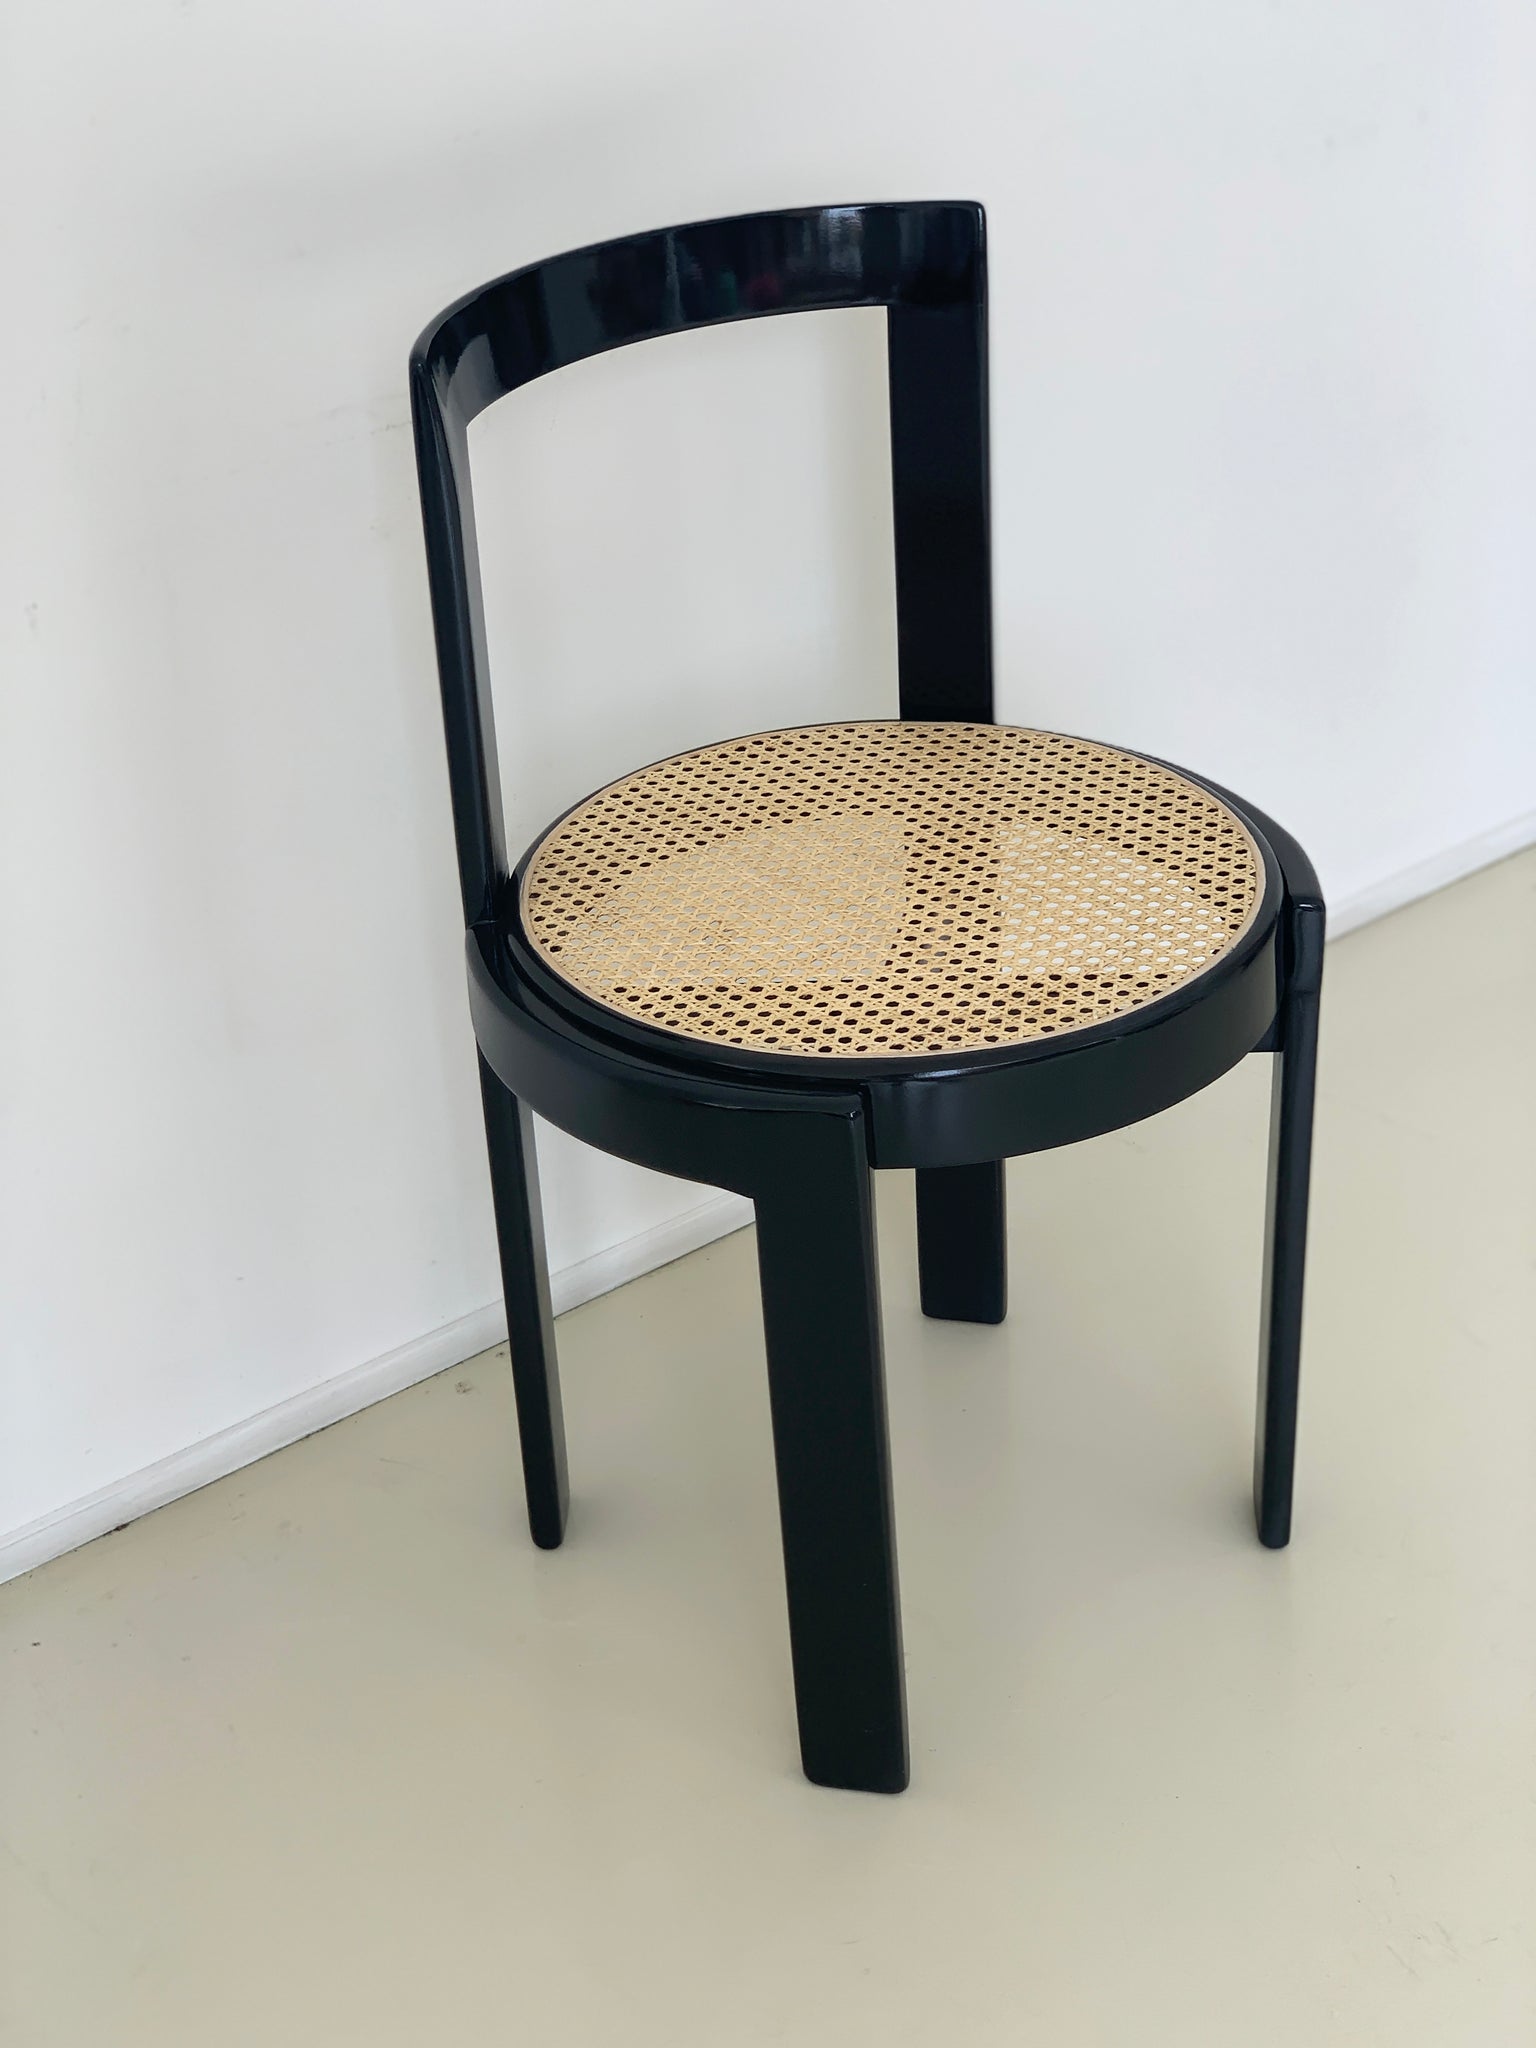 1970s Italian Cane Round Chair